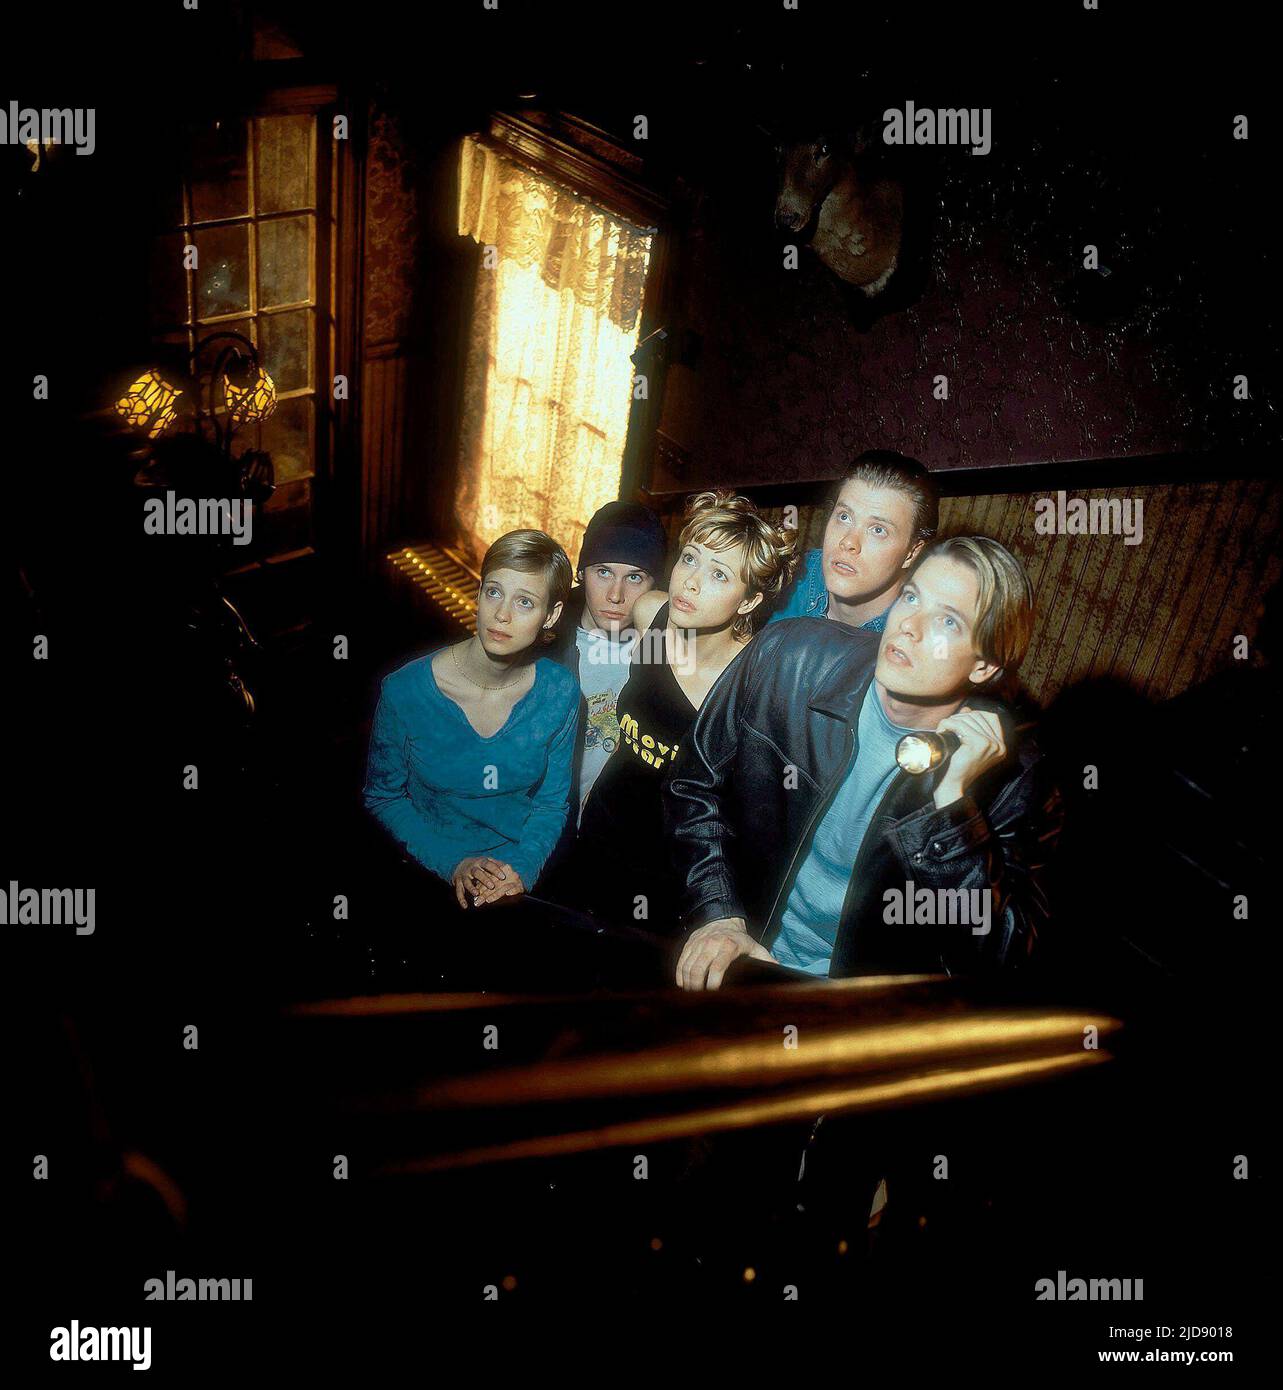 REGAN,LEMCHE,SKY,O'REILLY,JOHNSON, MIO OCCHIO PICCOLO, 2002, Foto Stock